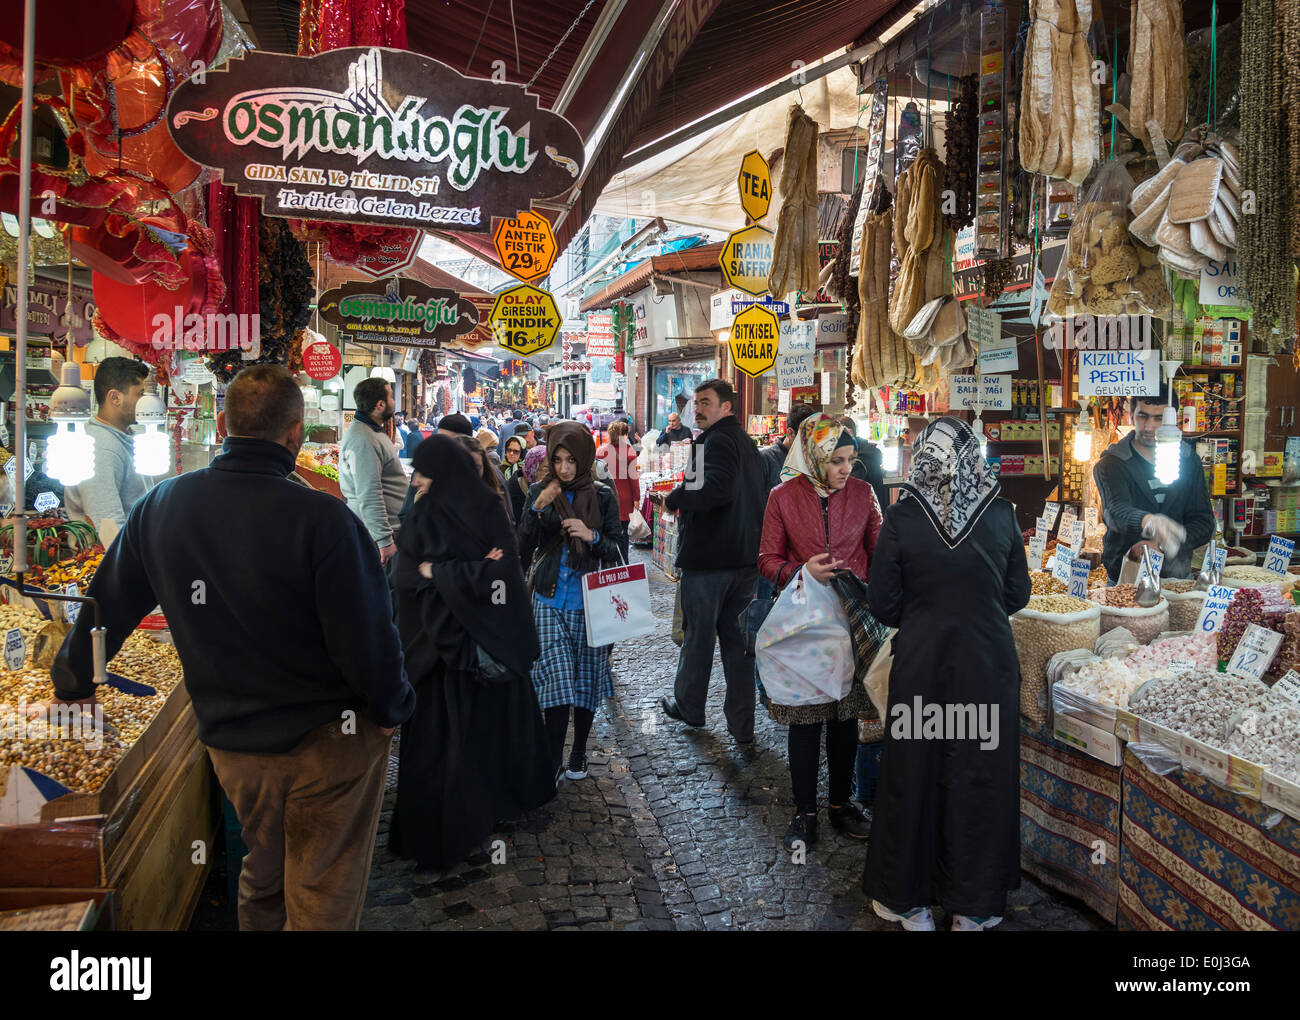 Market stalls on Hasircilar Caddesi at the entrance to the  Egyptian bazaar, AKA spice bazaar, Eminonu, Istanbul, Turkey. Stock Photo